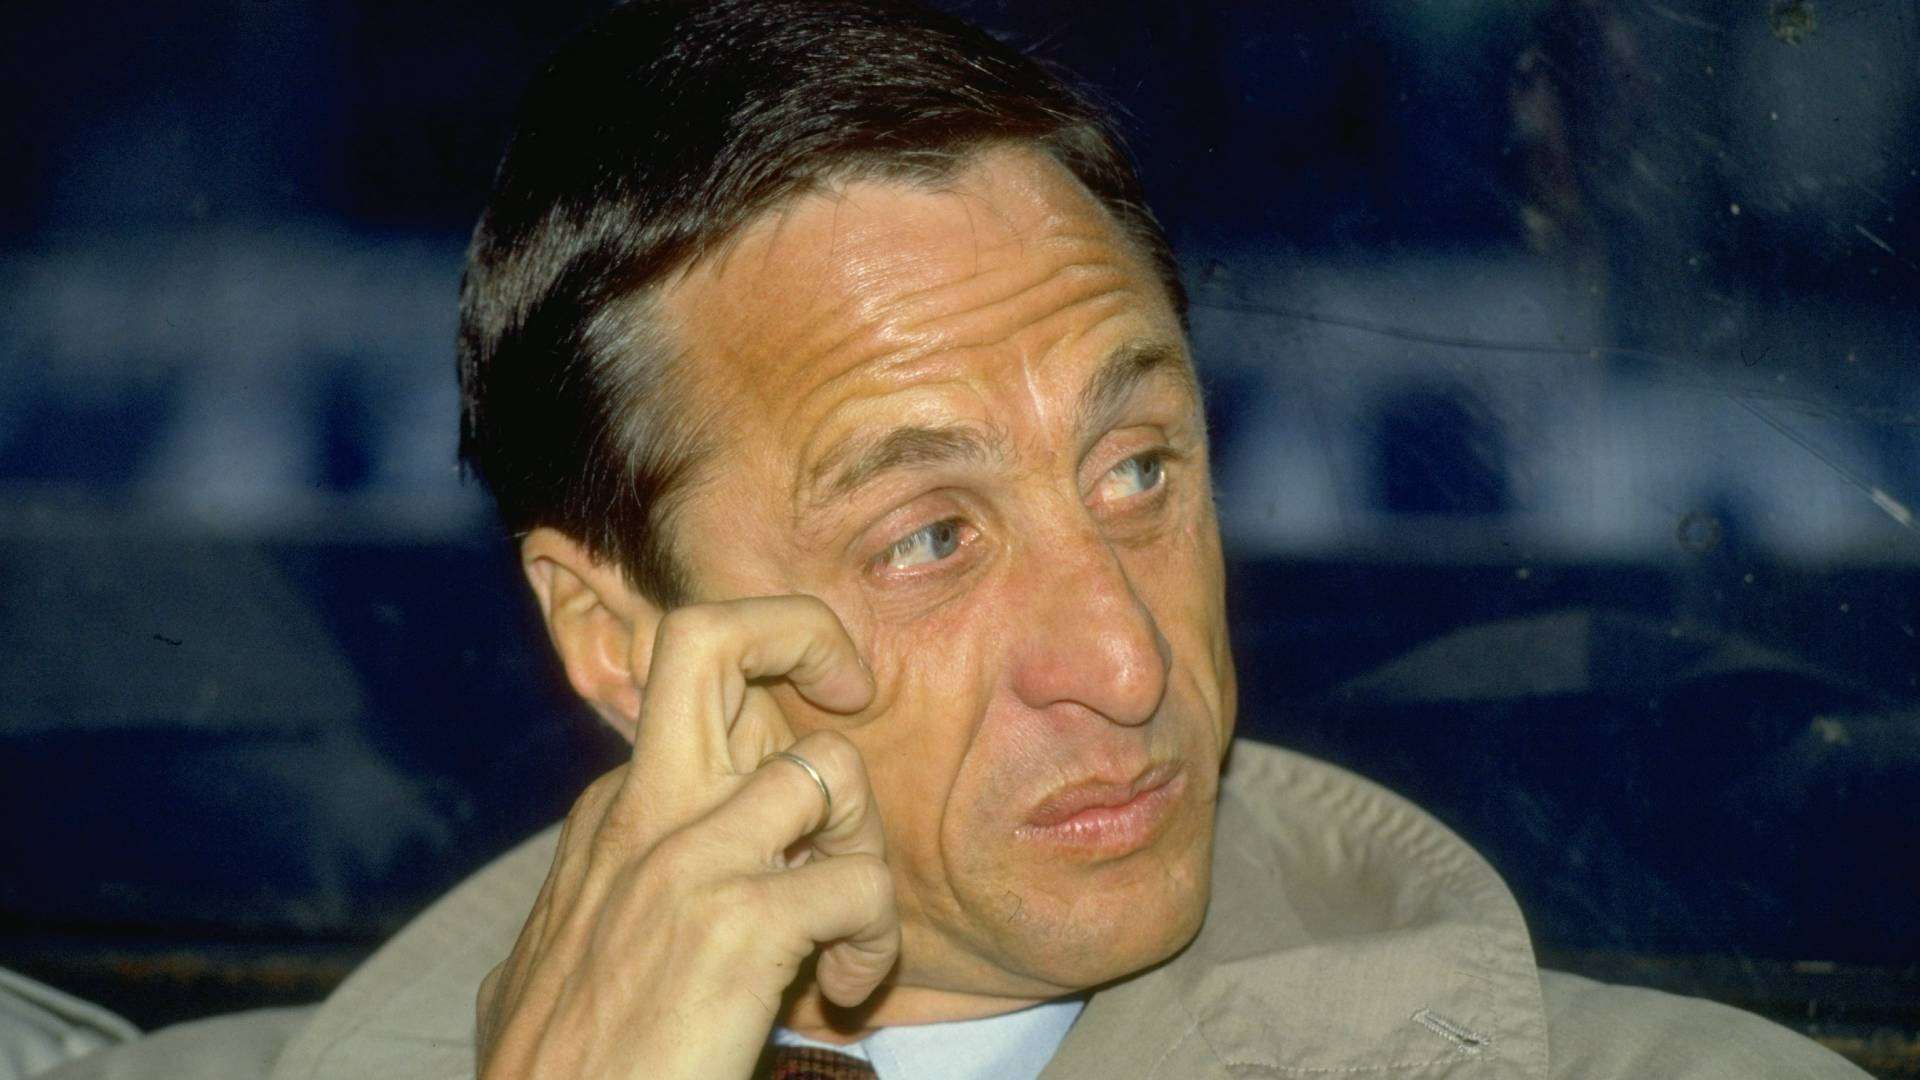 Johan Cruyff FC Barcelona Trainer